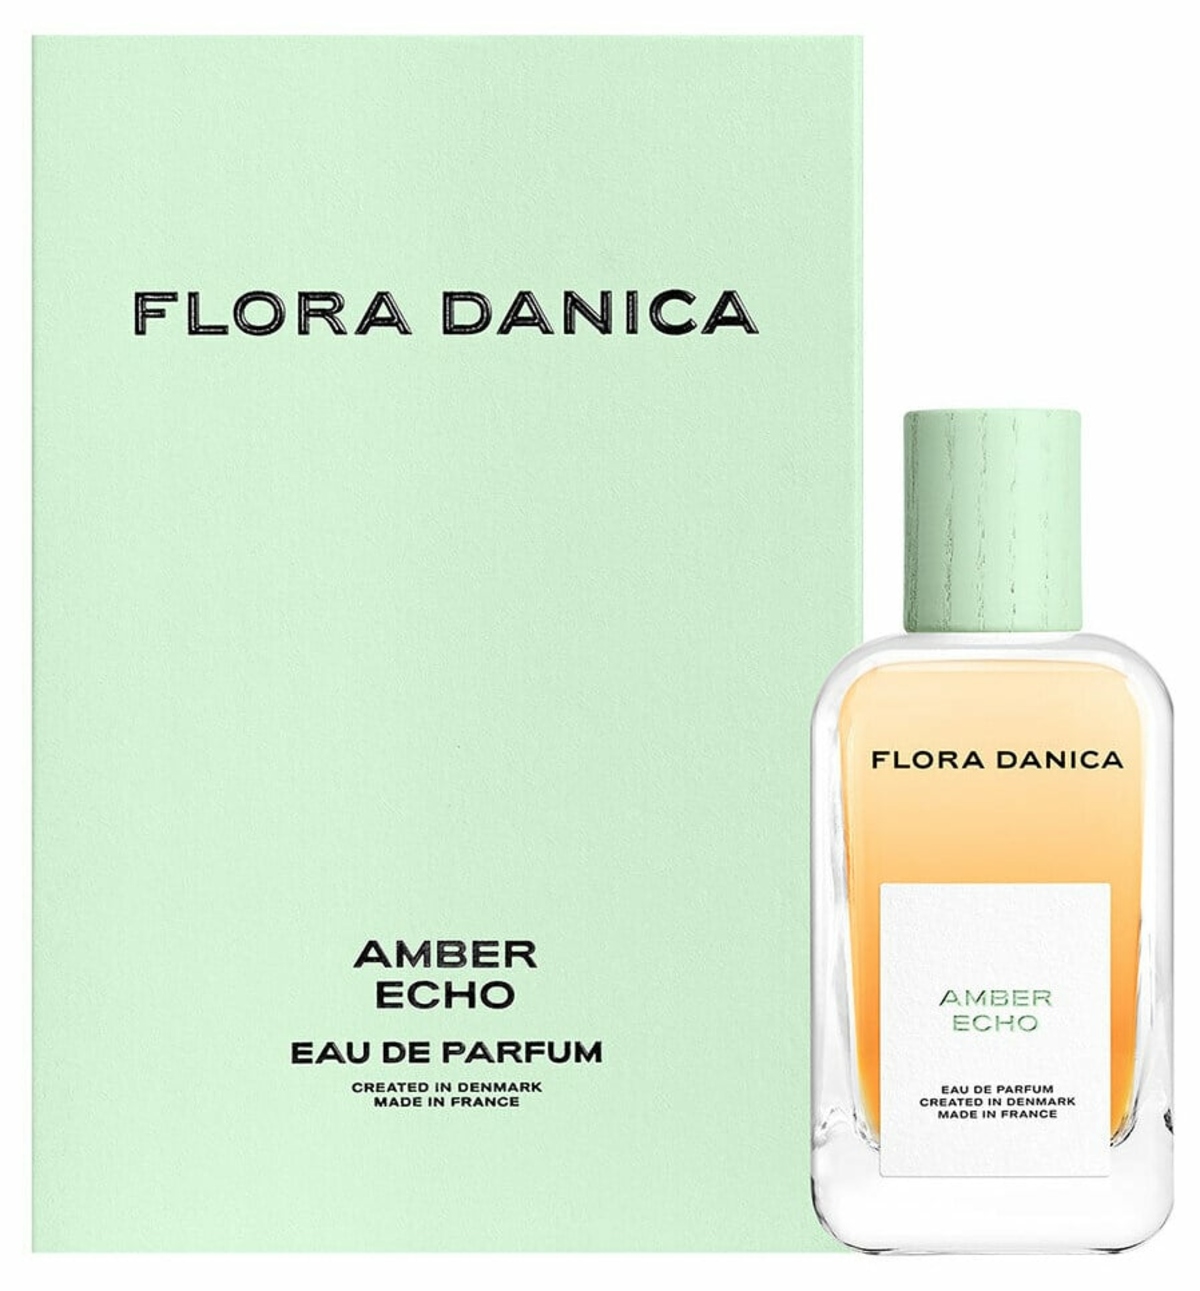 Amber Echo - Flora Danica